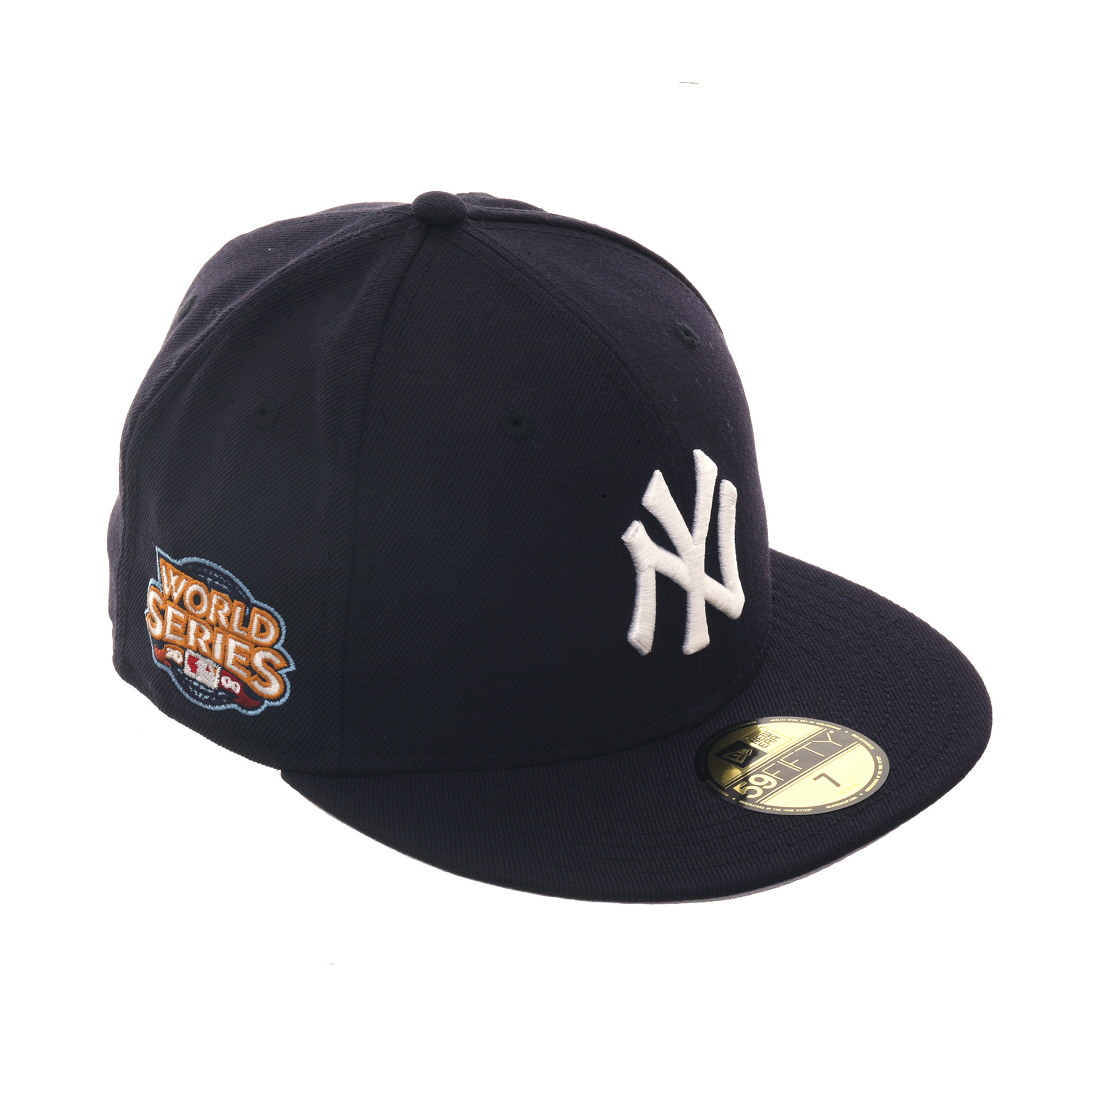 new york yankees 2009 world series hat